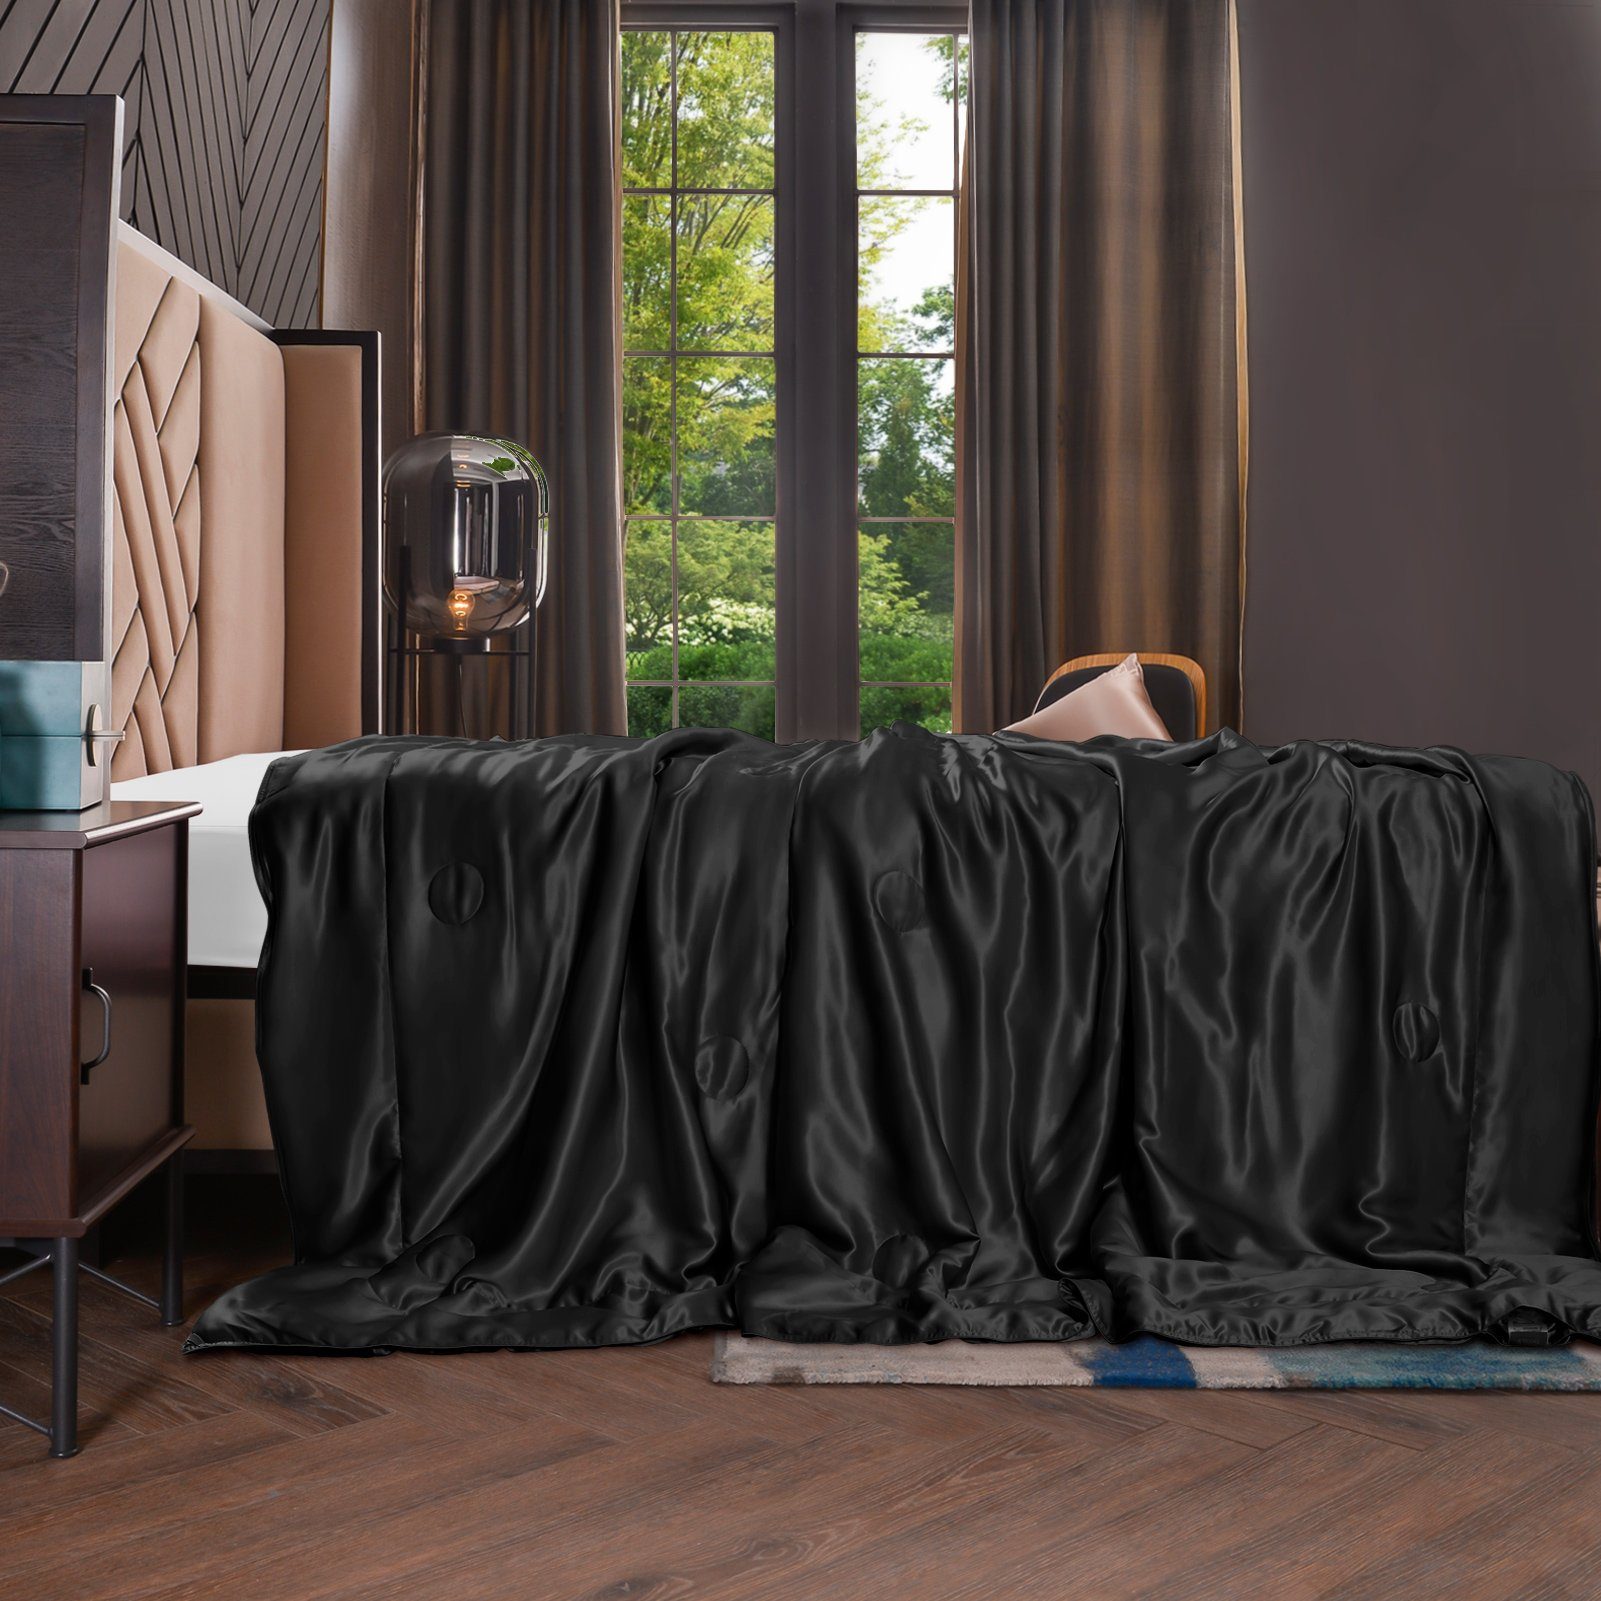 Sommerbettdecke, 135x180 cm, THXSILK, Füllung: 100% Seide, Bezug: 100% Seide, kühlend, leicht, hautfreundlich Schwarz